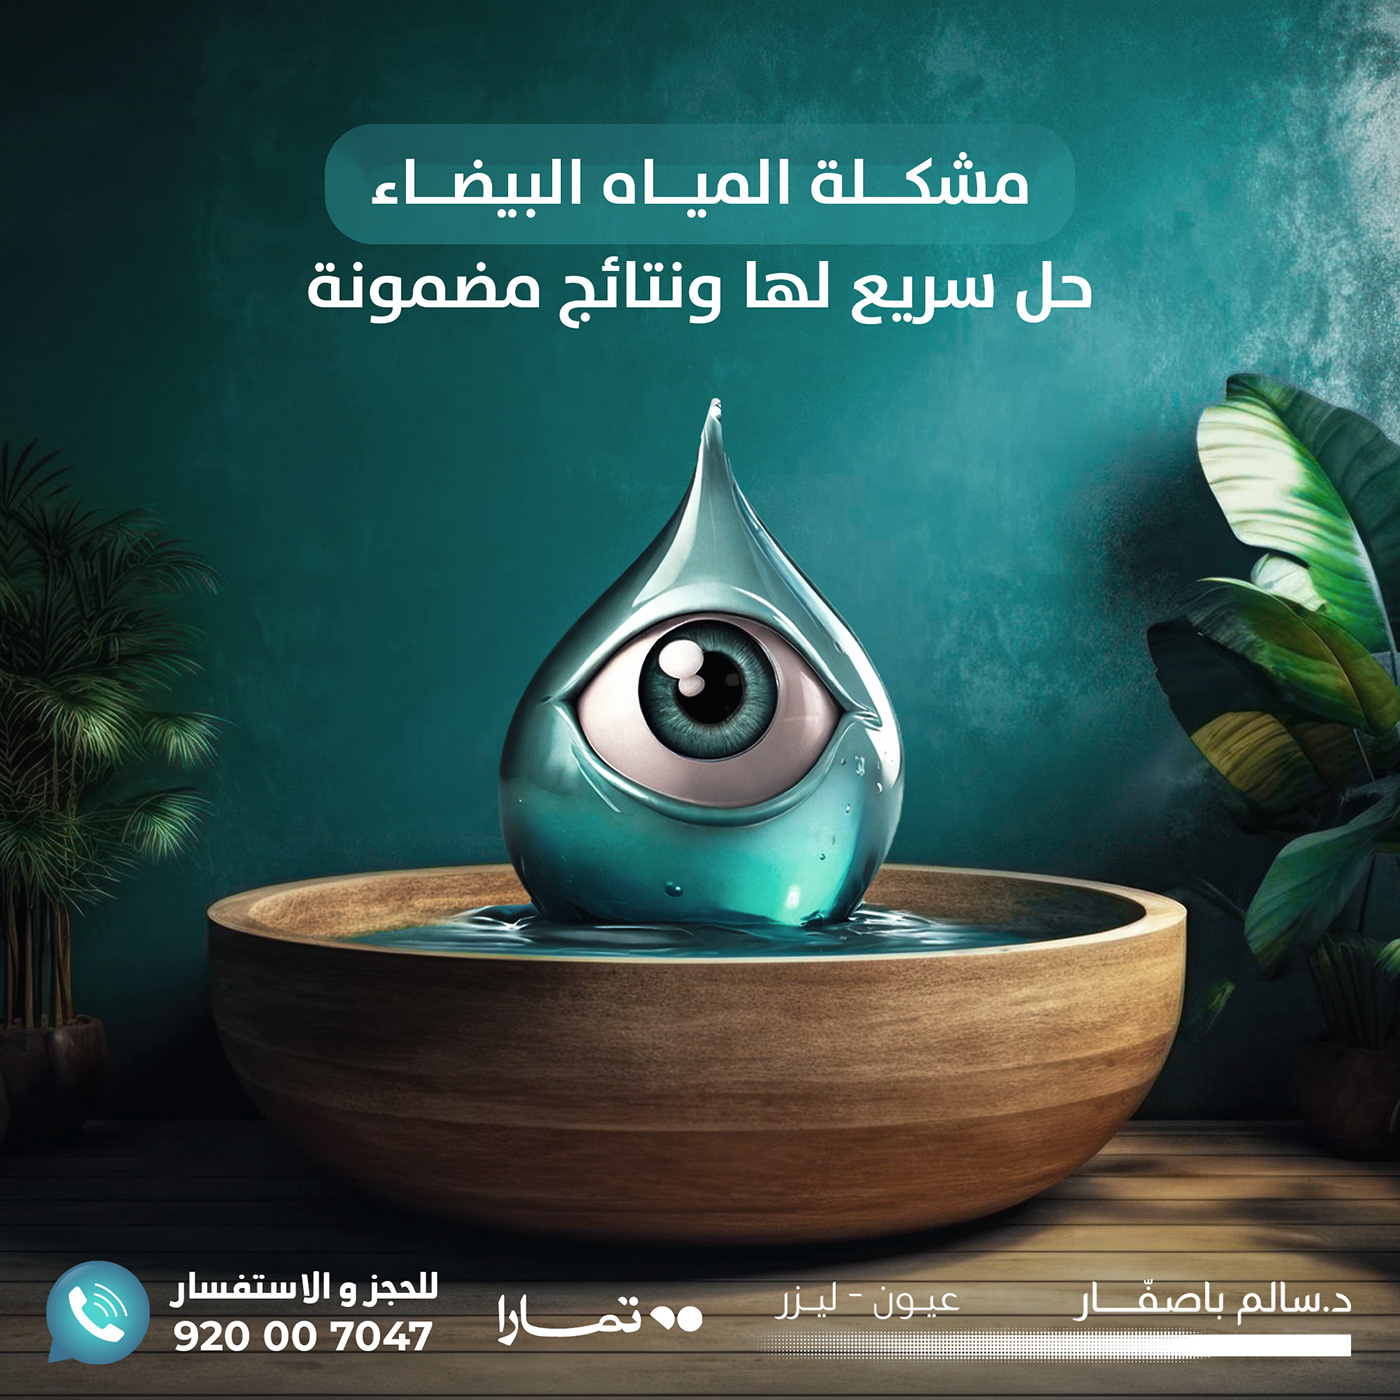 eye clinic post medical social media Advertising  Graphic Designer Social media post marketing   opthalmology eye design Socialmedia